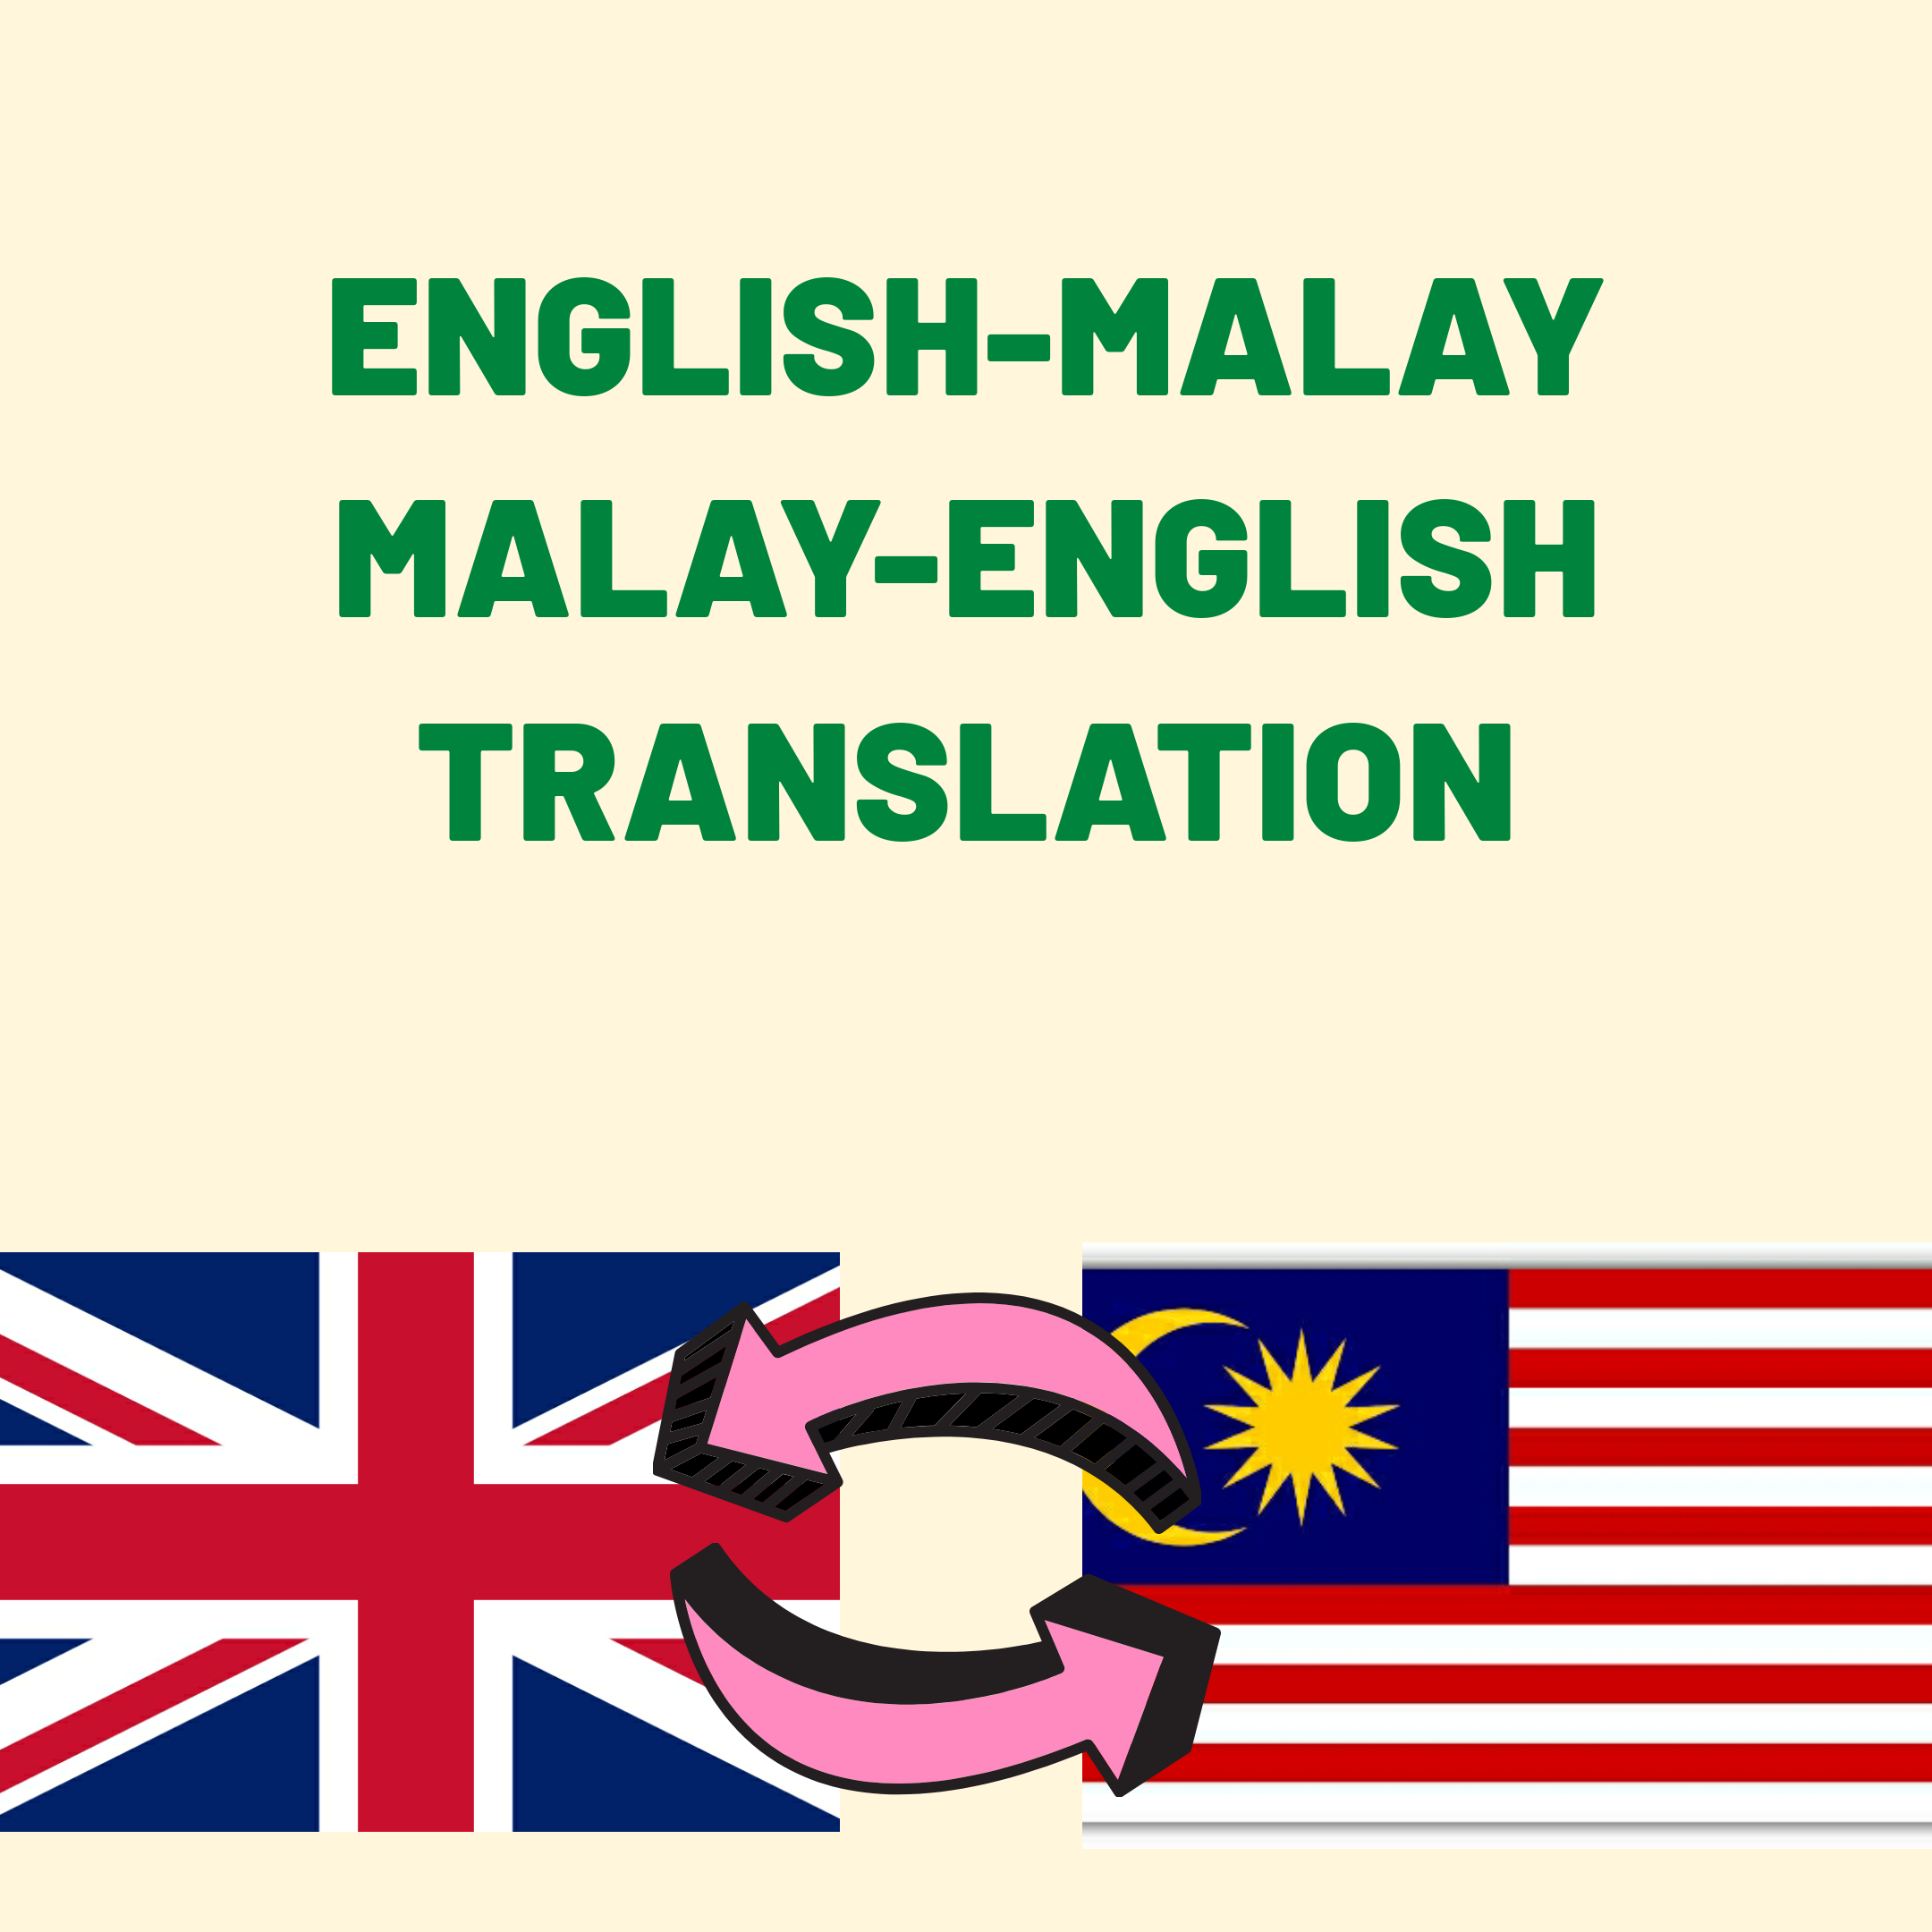 To translite malay english English